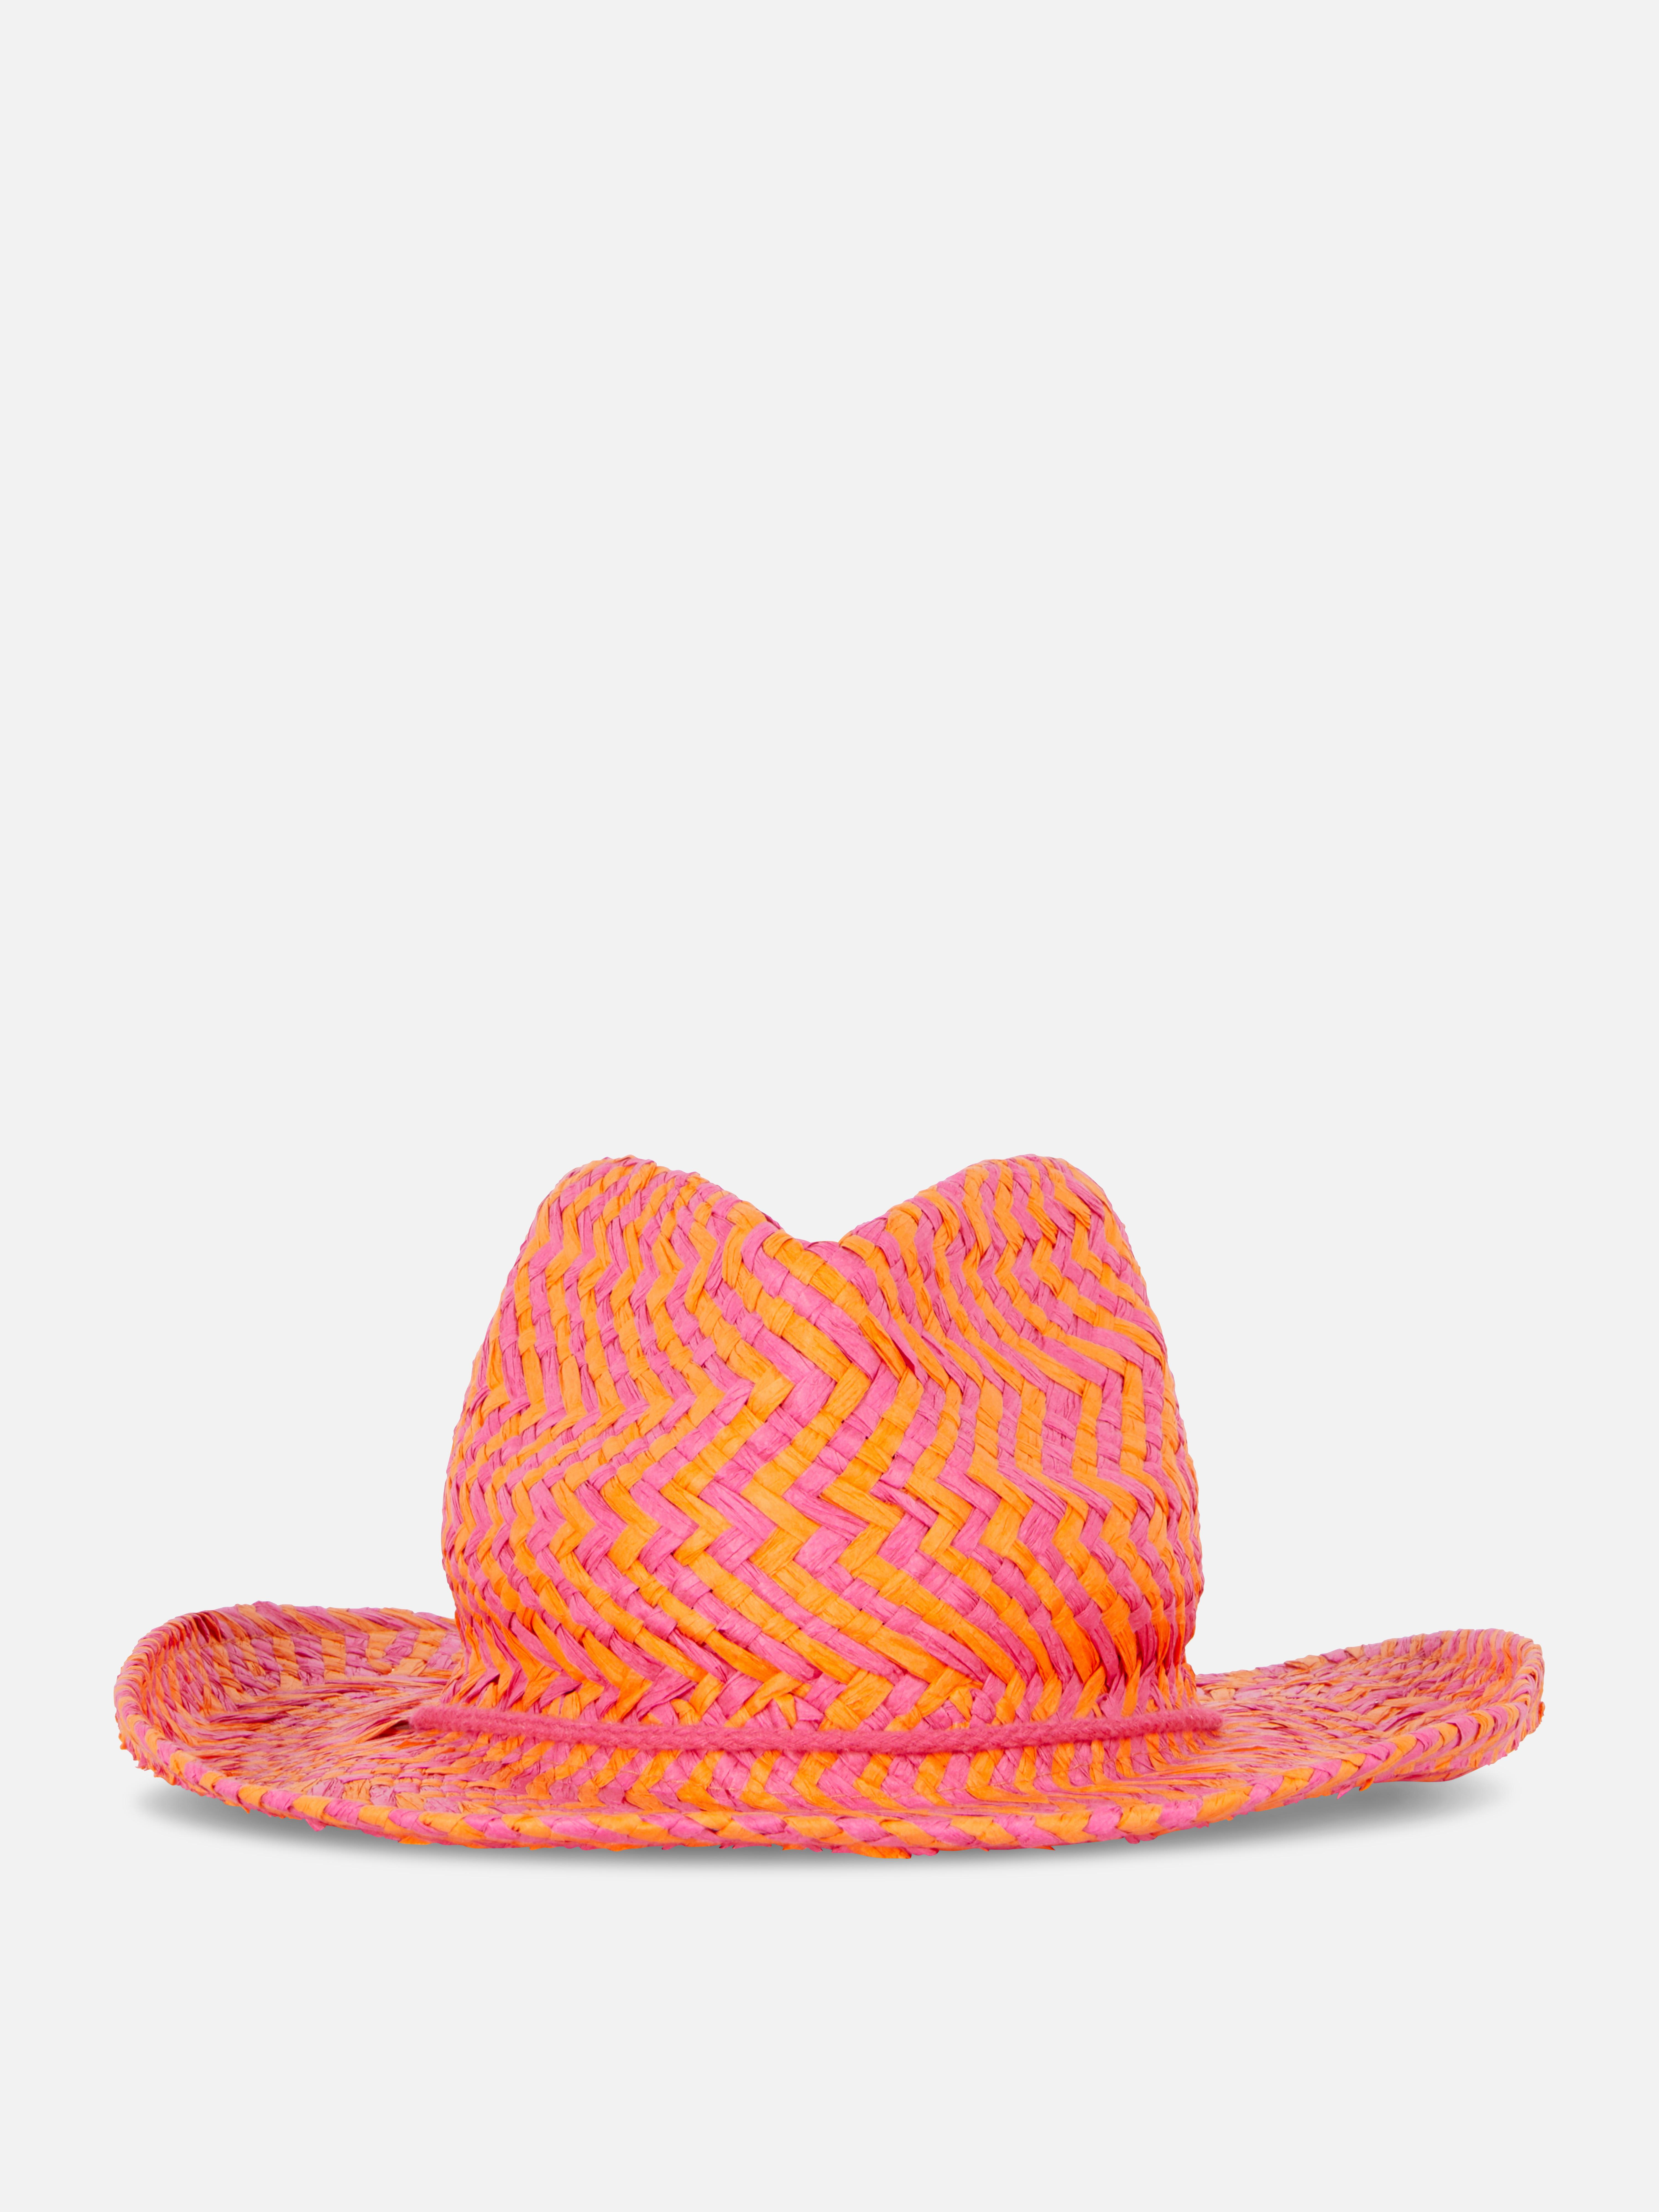 Zig-Zag Cowboy Hat